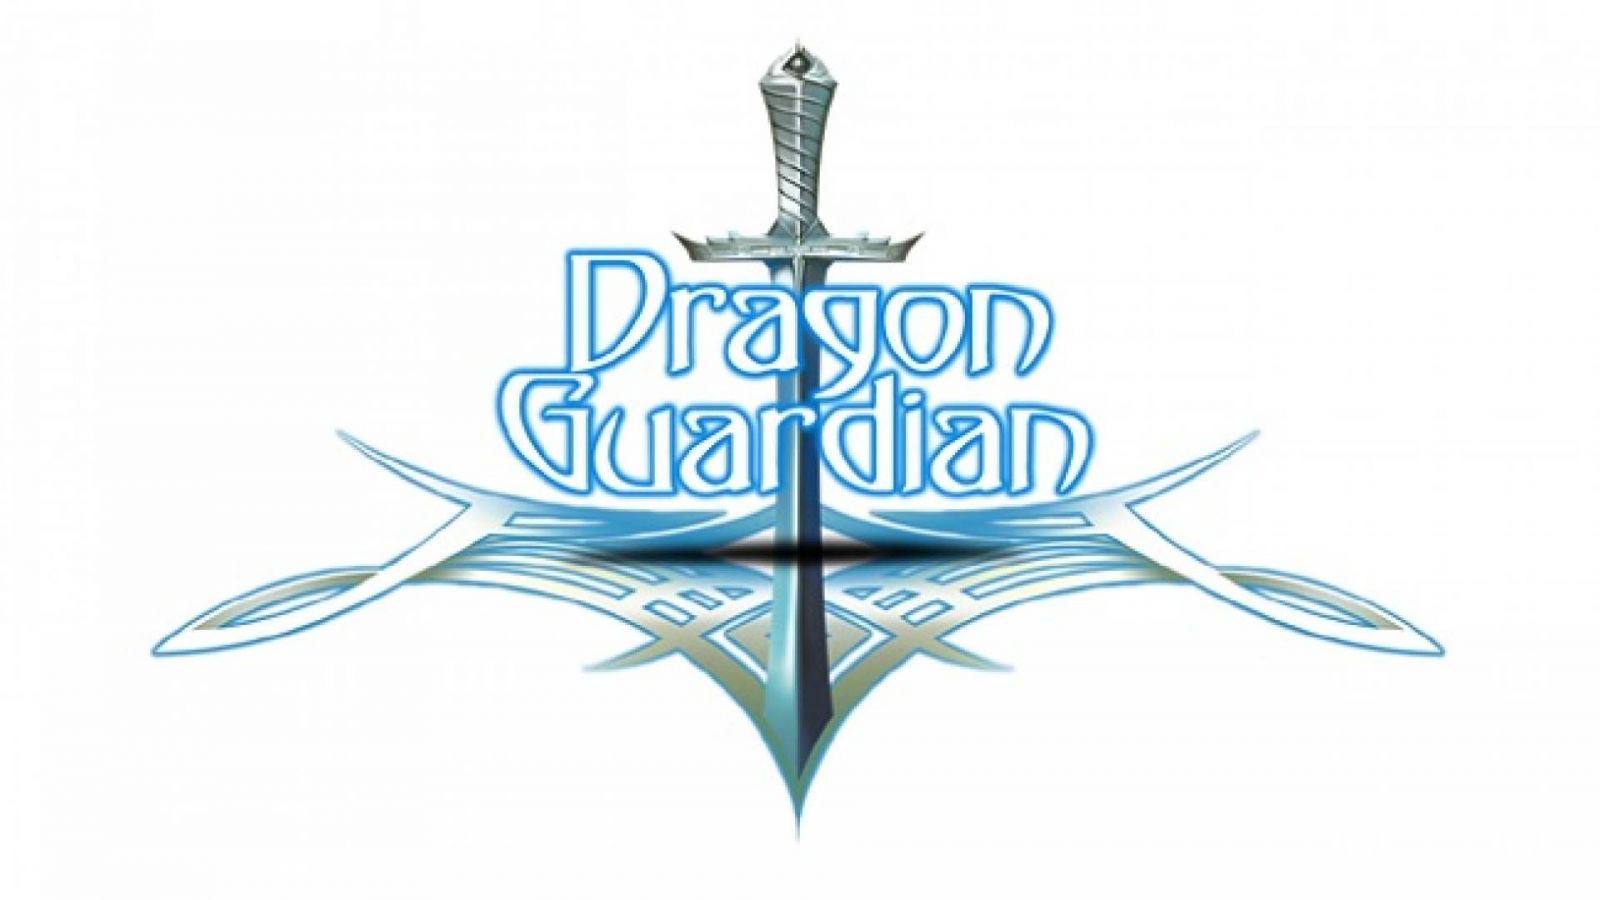 Dragon Guardian © 